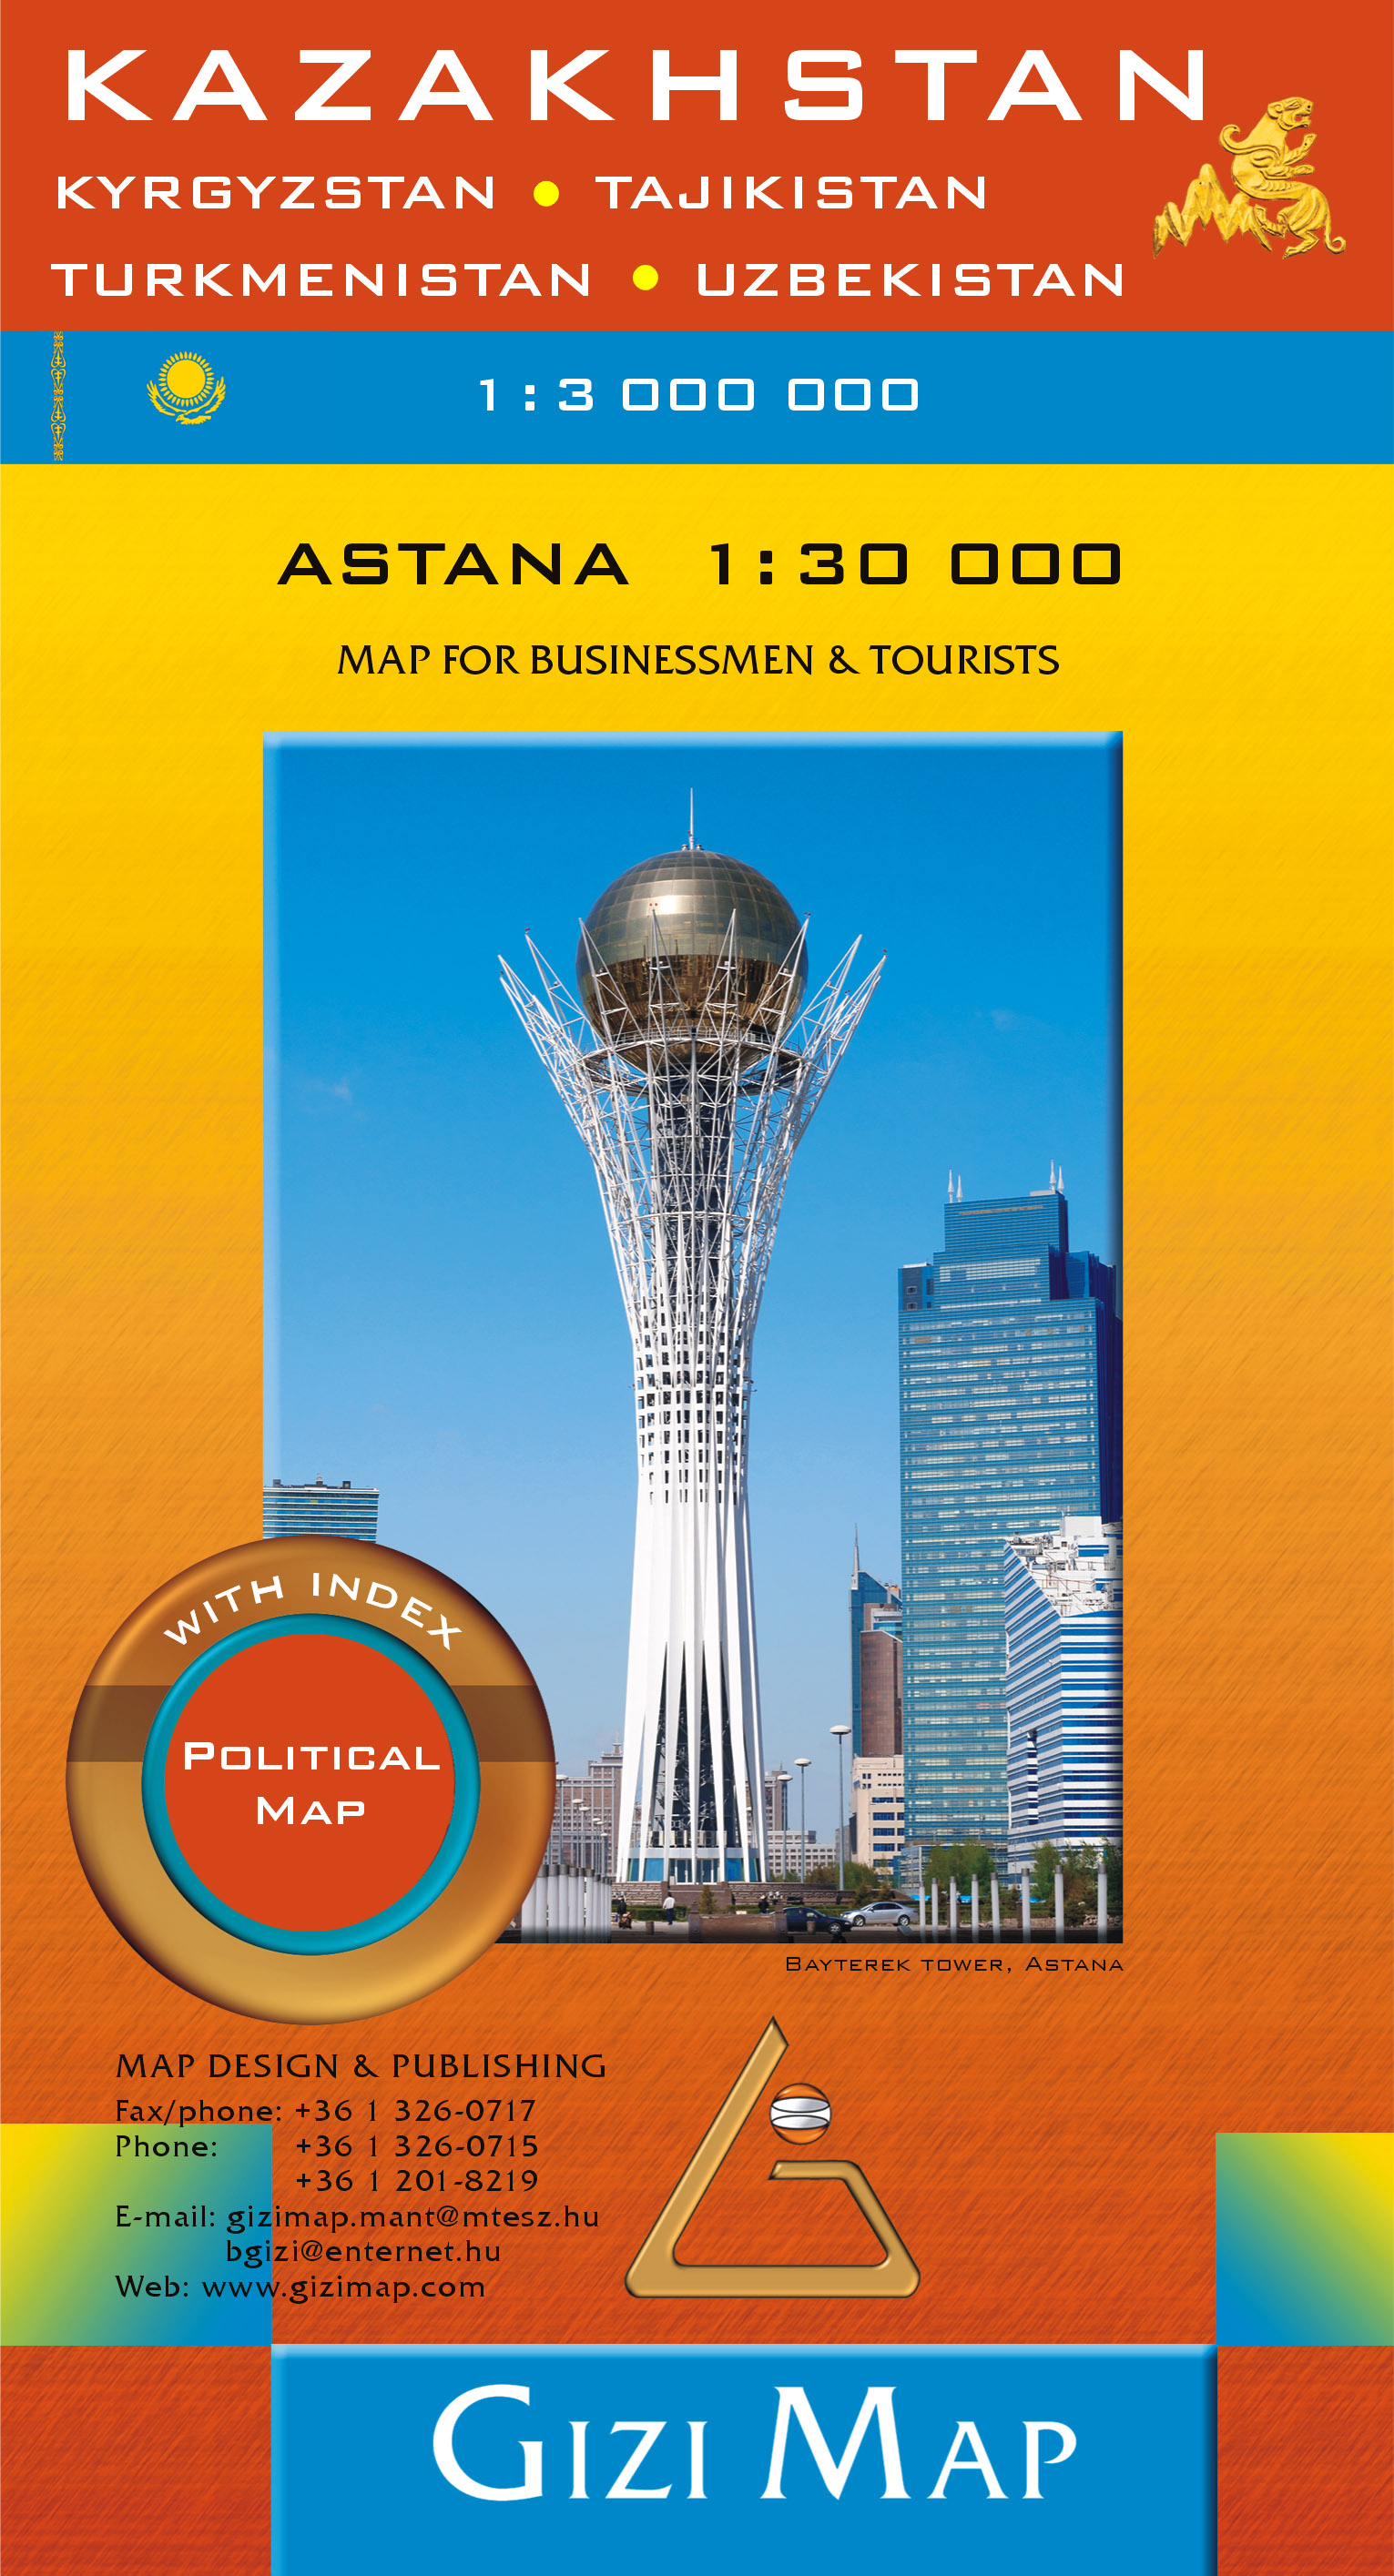 Inset map: Astana. Including also Kyrgyzstan, Uzbekistan, Turkmenistan, Tajikistan